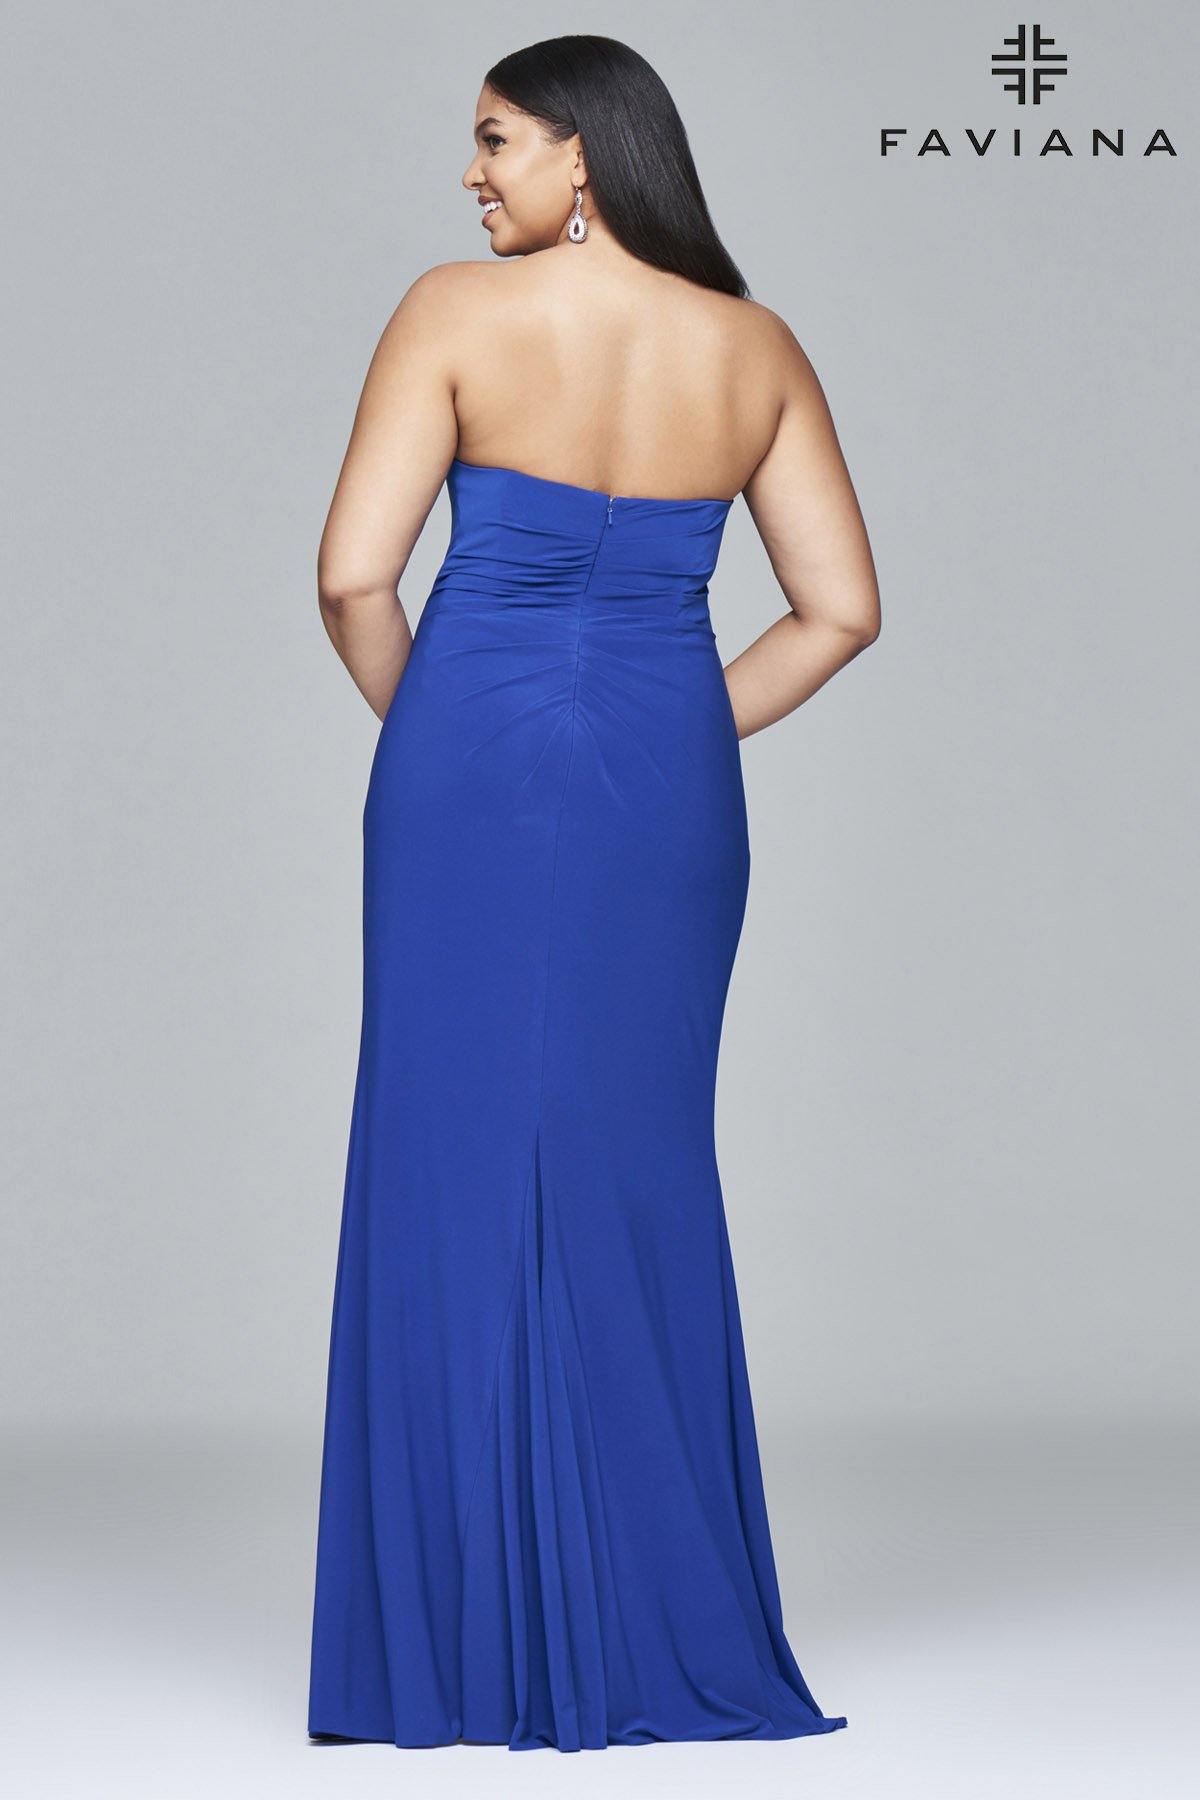 Faviana 9413 Long Strapless Plus Size Formal Dress - The Dress Outlet Faviana